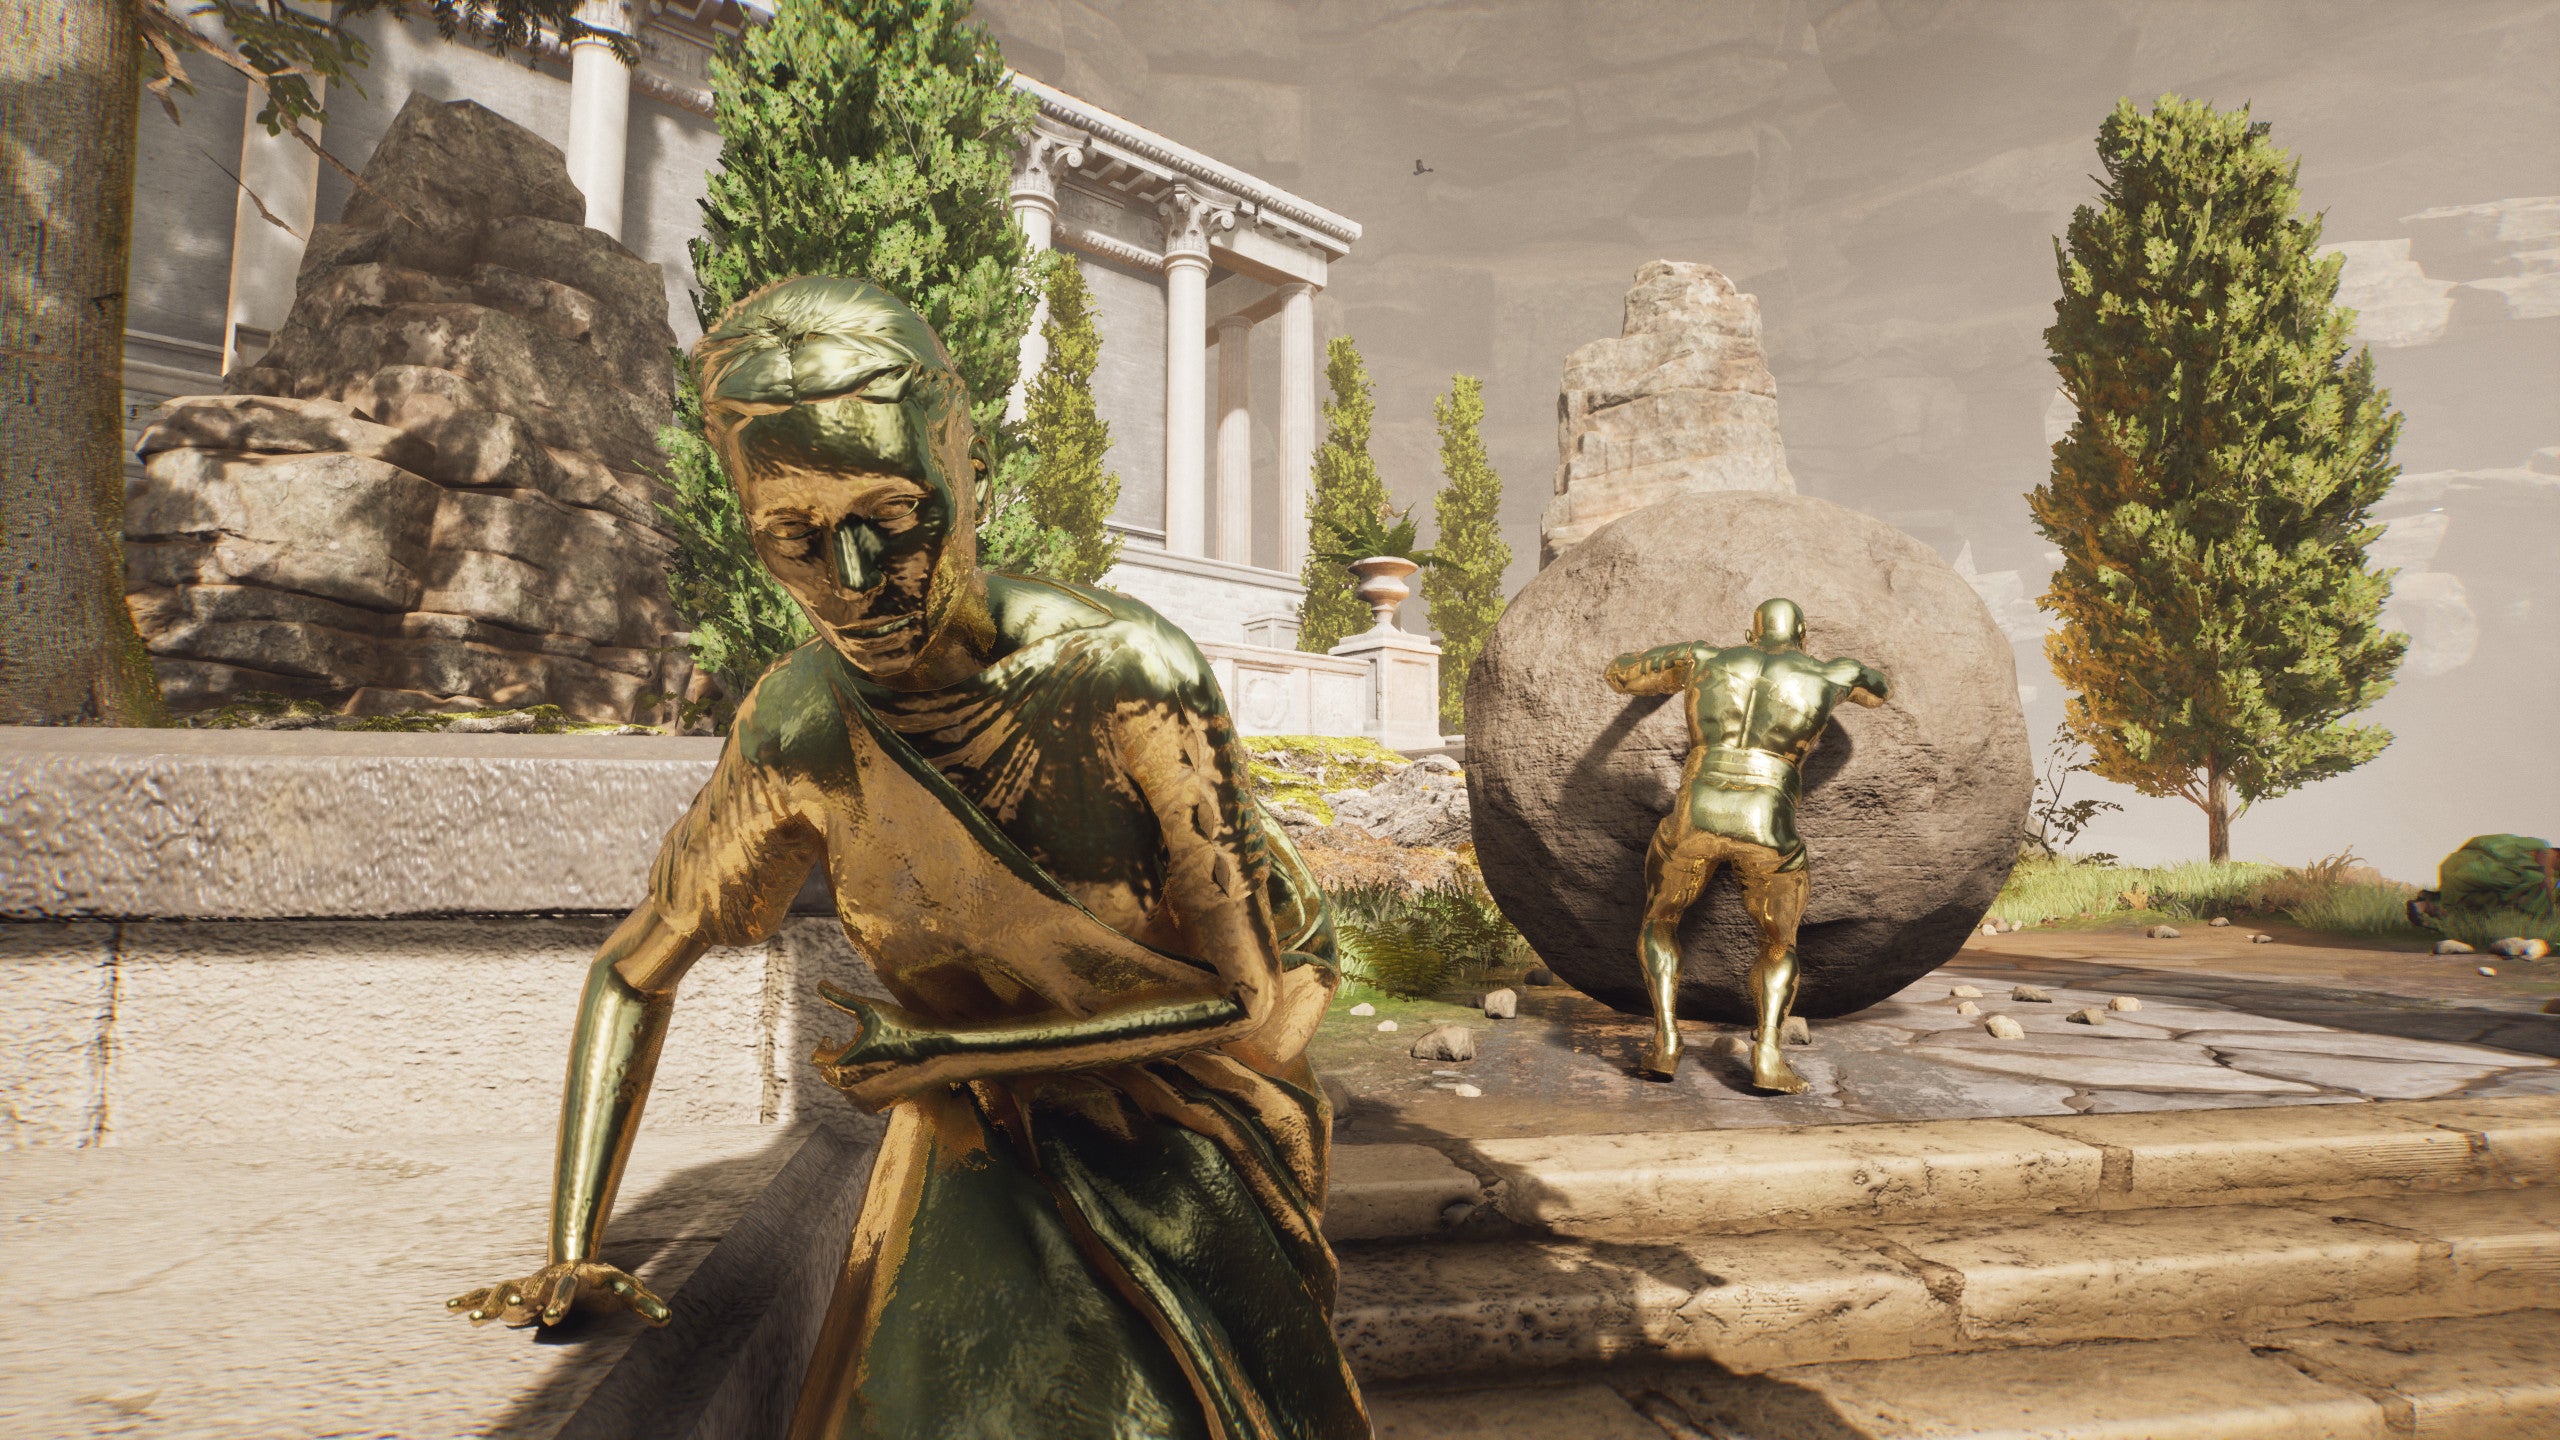 The golden statues in the Forgotten City screenshot.